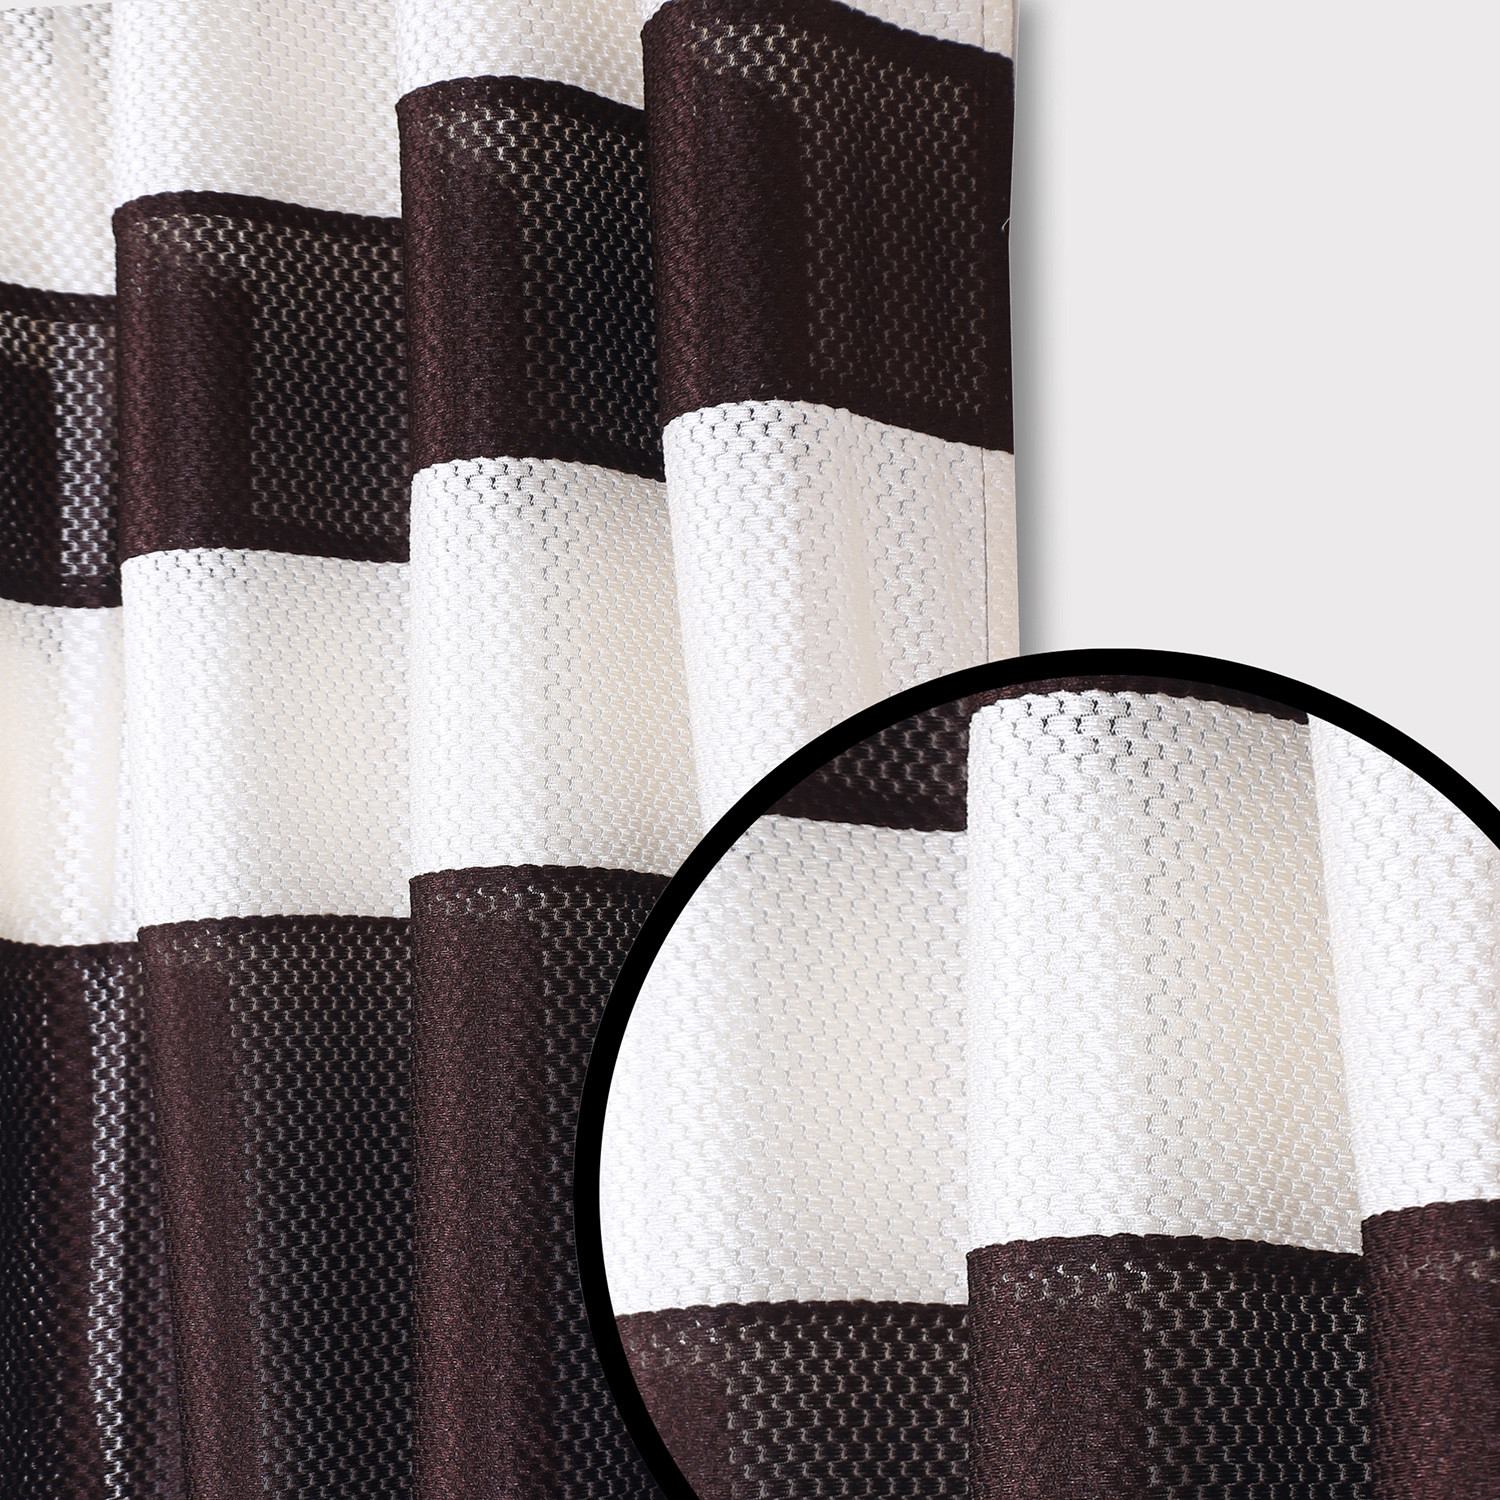 Kuber Industries Polyester Window Curtain 8 Eyelets,7 Feet (Brown) 54KM4323